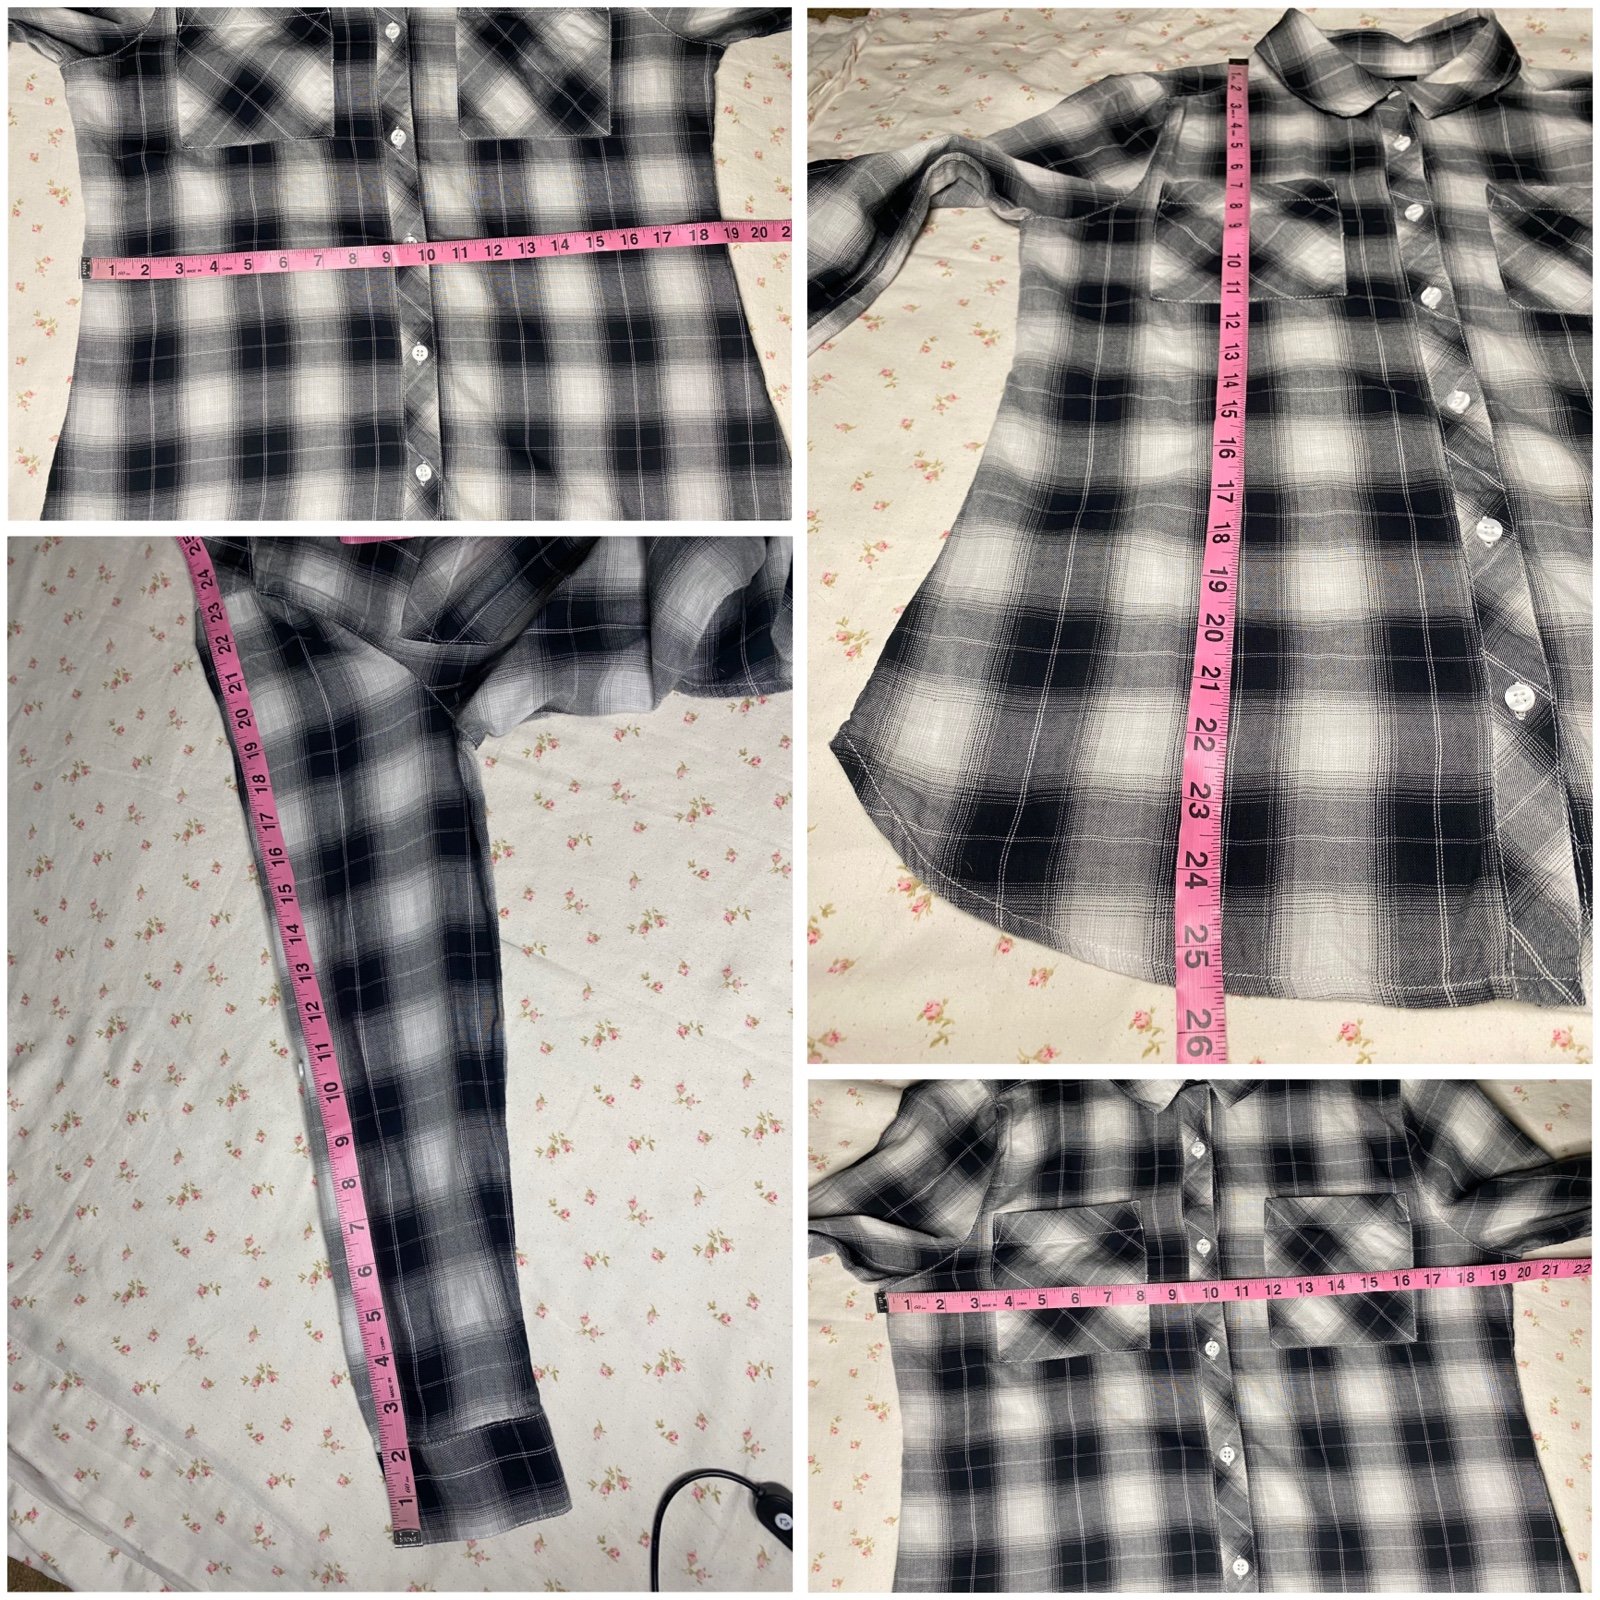 Affordable Grunge Tumblr Girl Women’s Black & White Button Down Plaid Long Sleeve Shirt p5eY8RIBg Wholesale